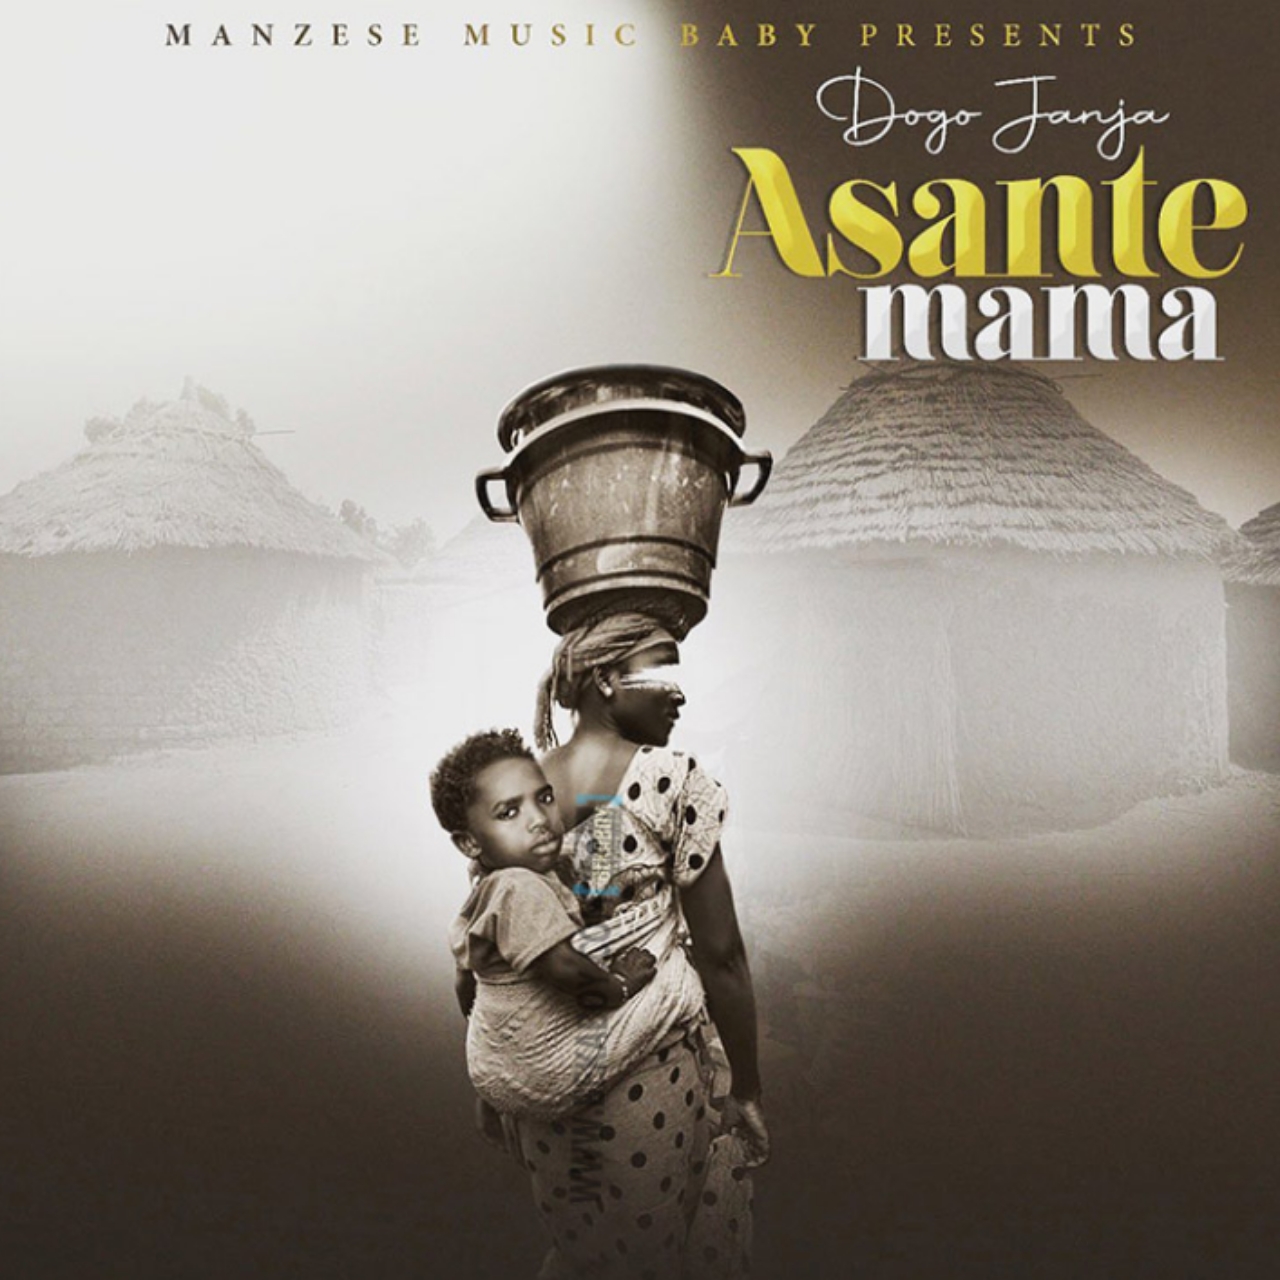 DOGO JANJA Asante Mama Album Cover